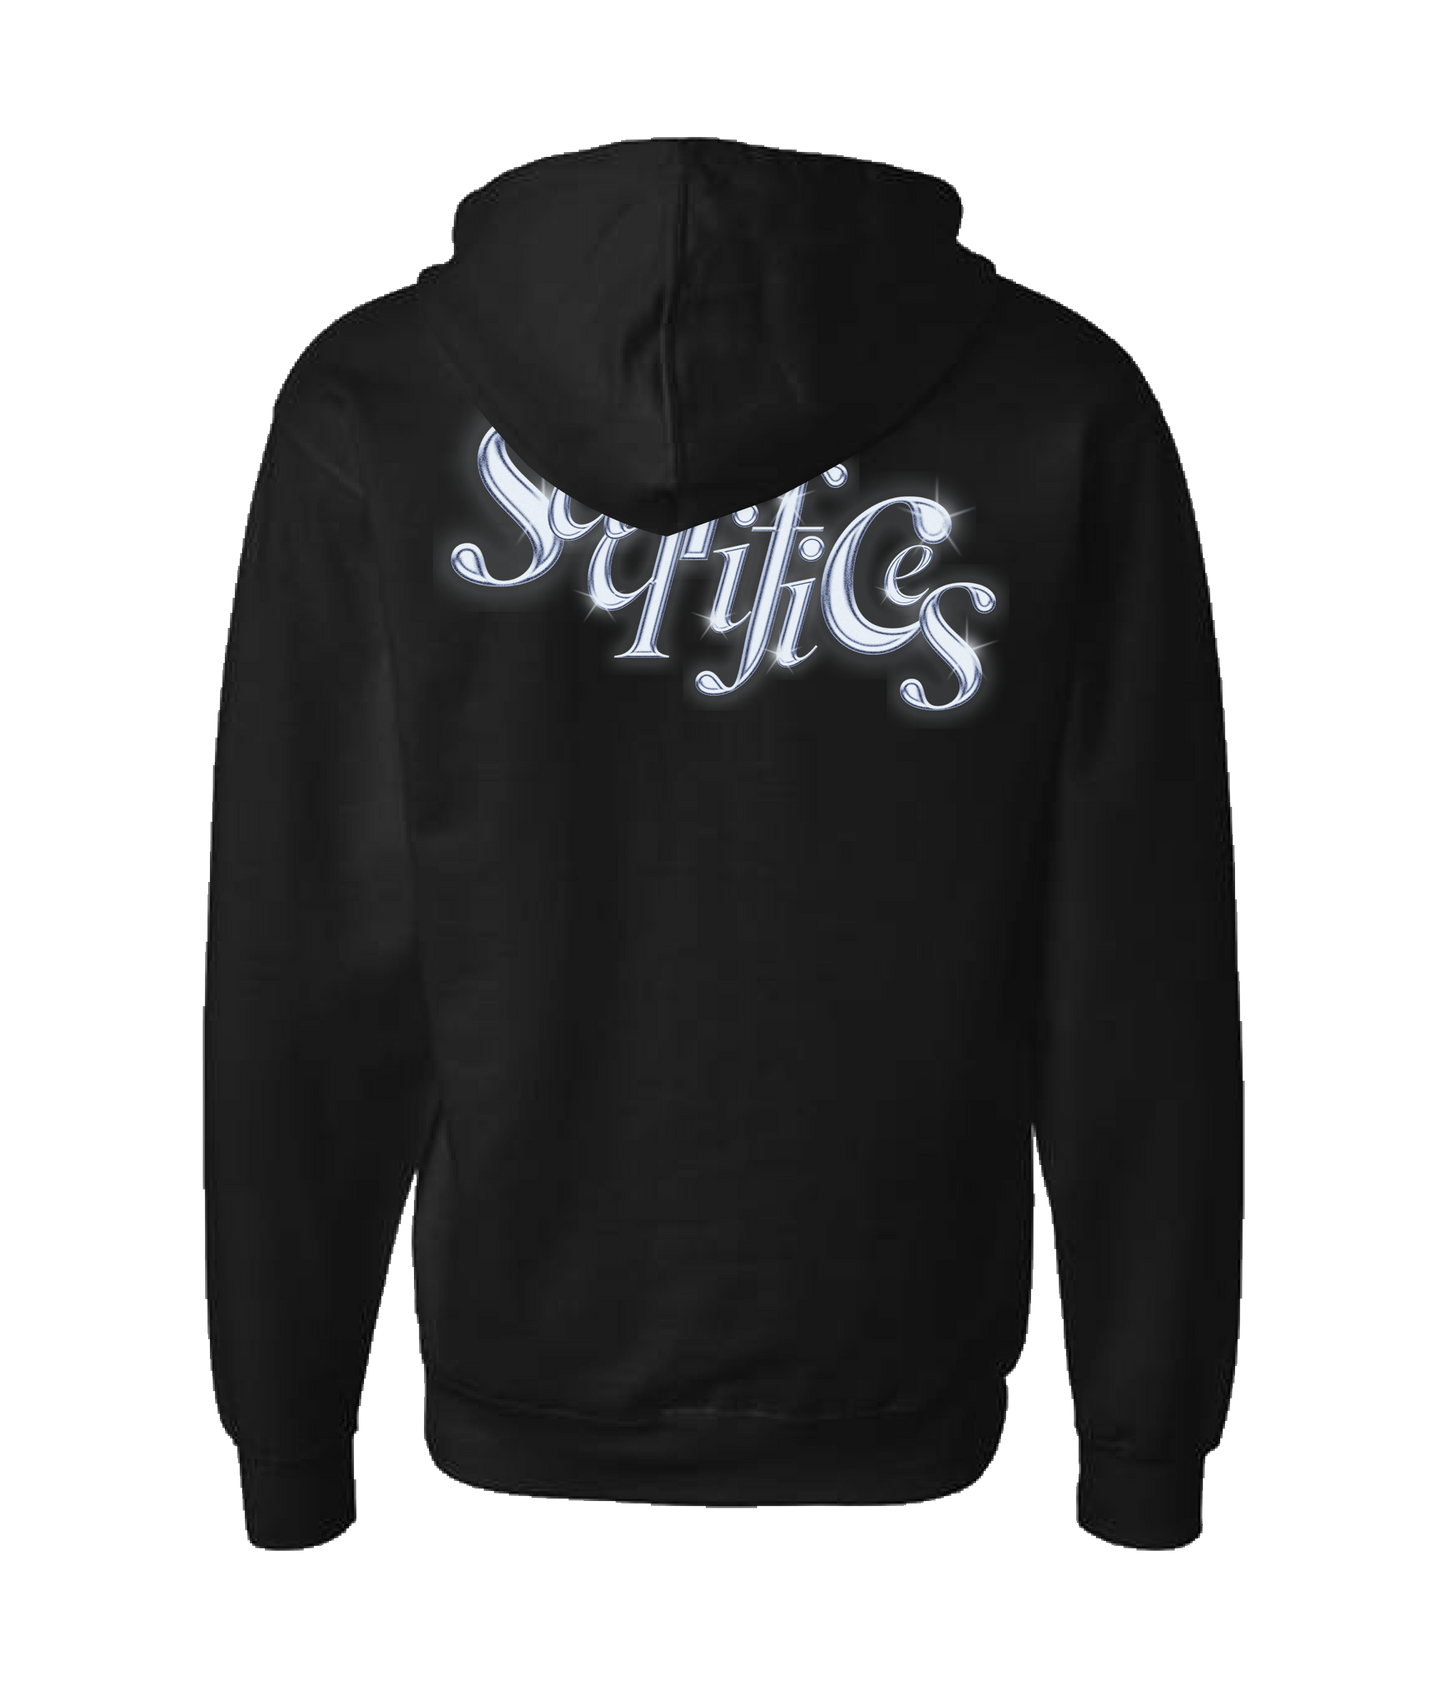 SAQRIFICES - Logo - Black Zip Up Hoodie